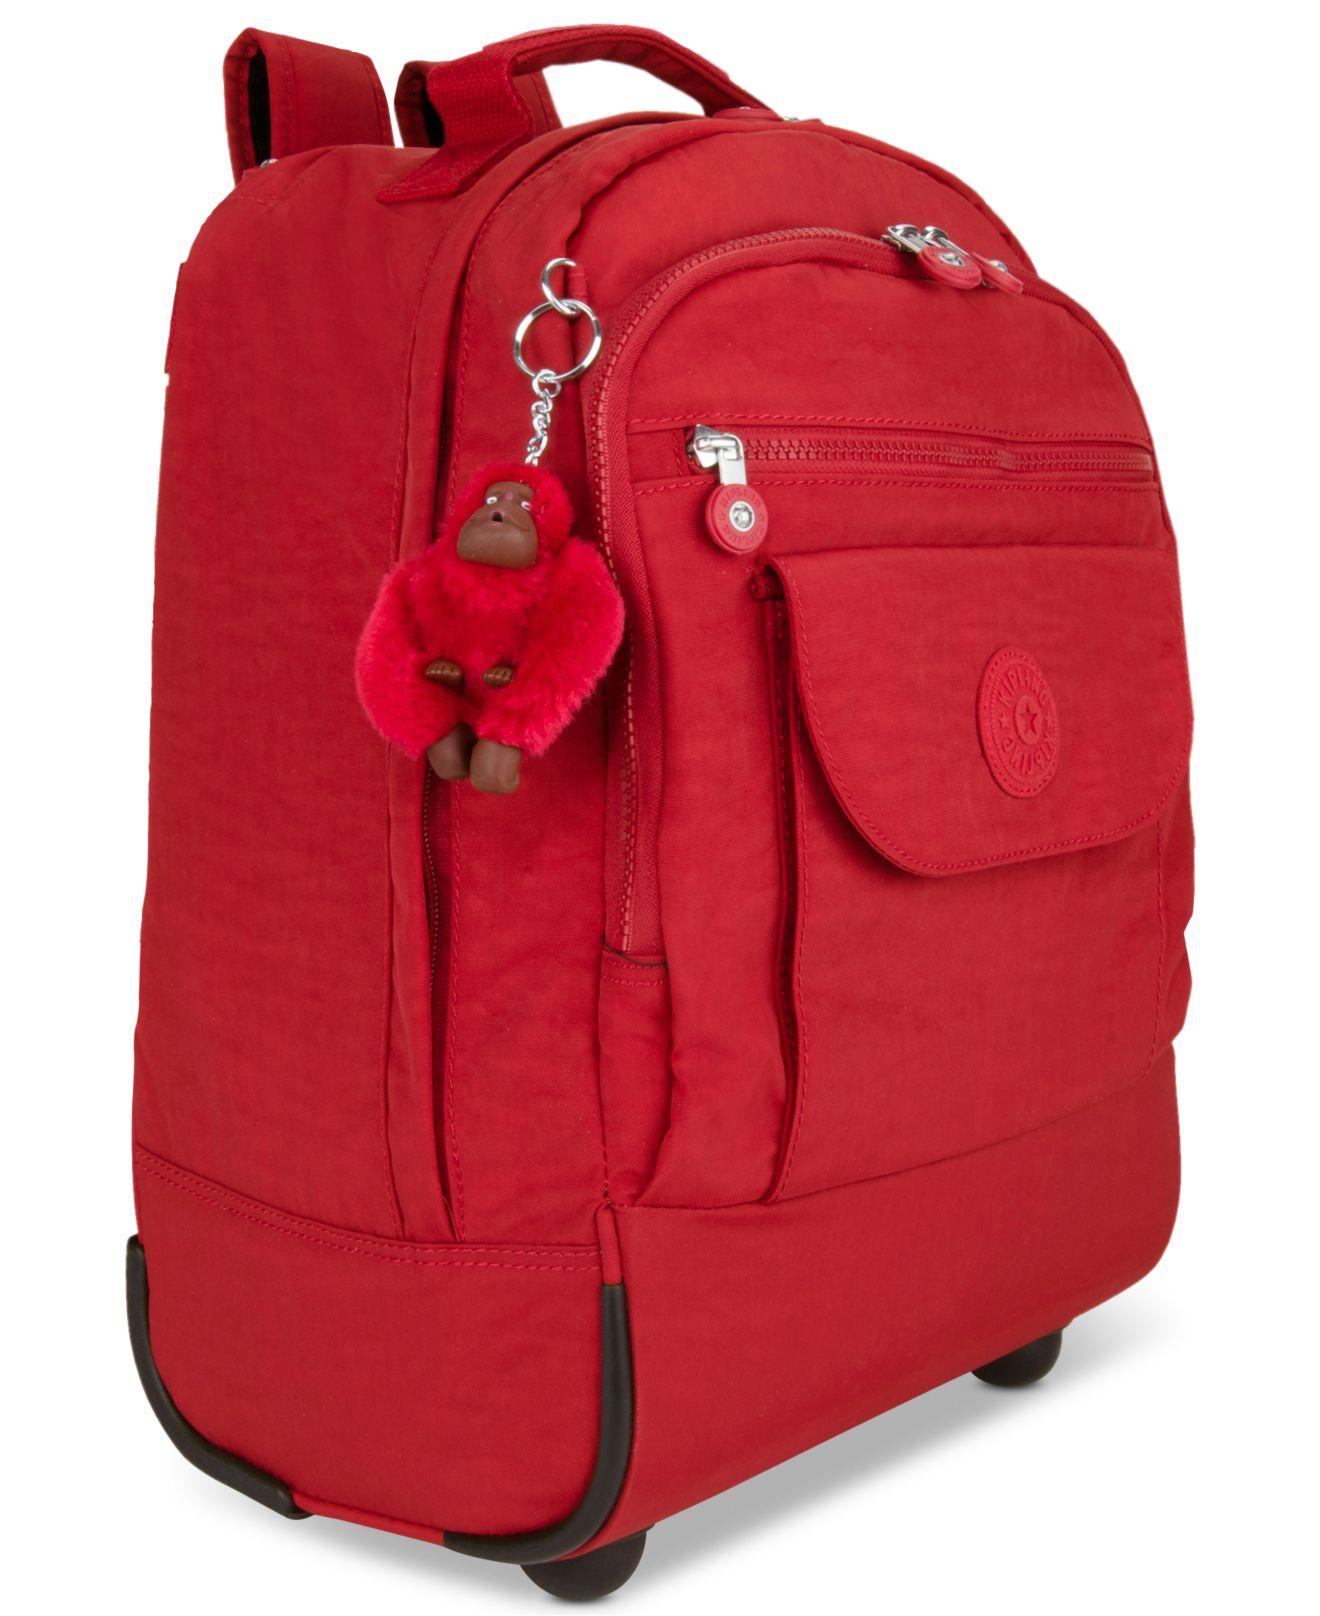 spacious backpacks